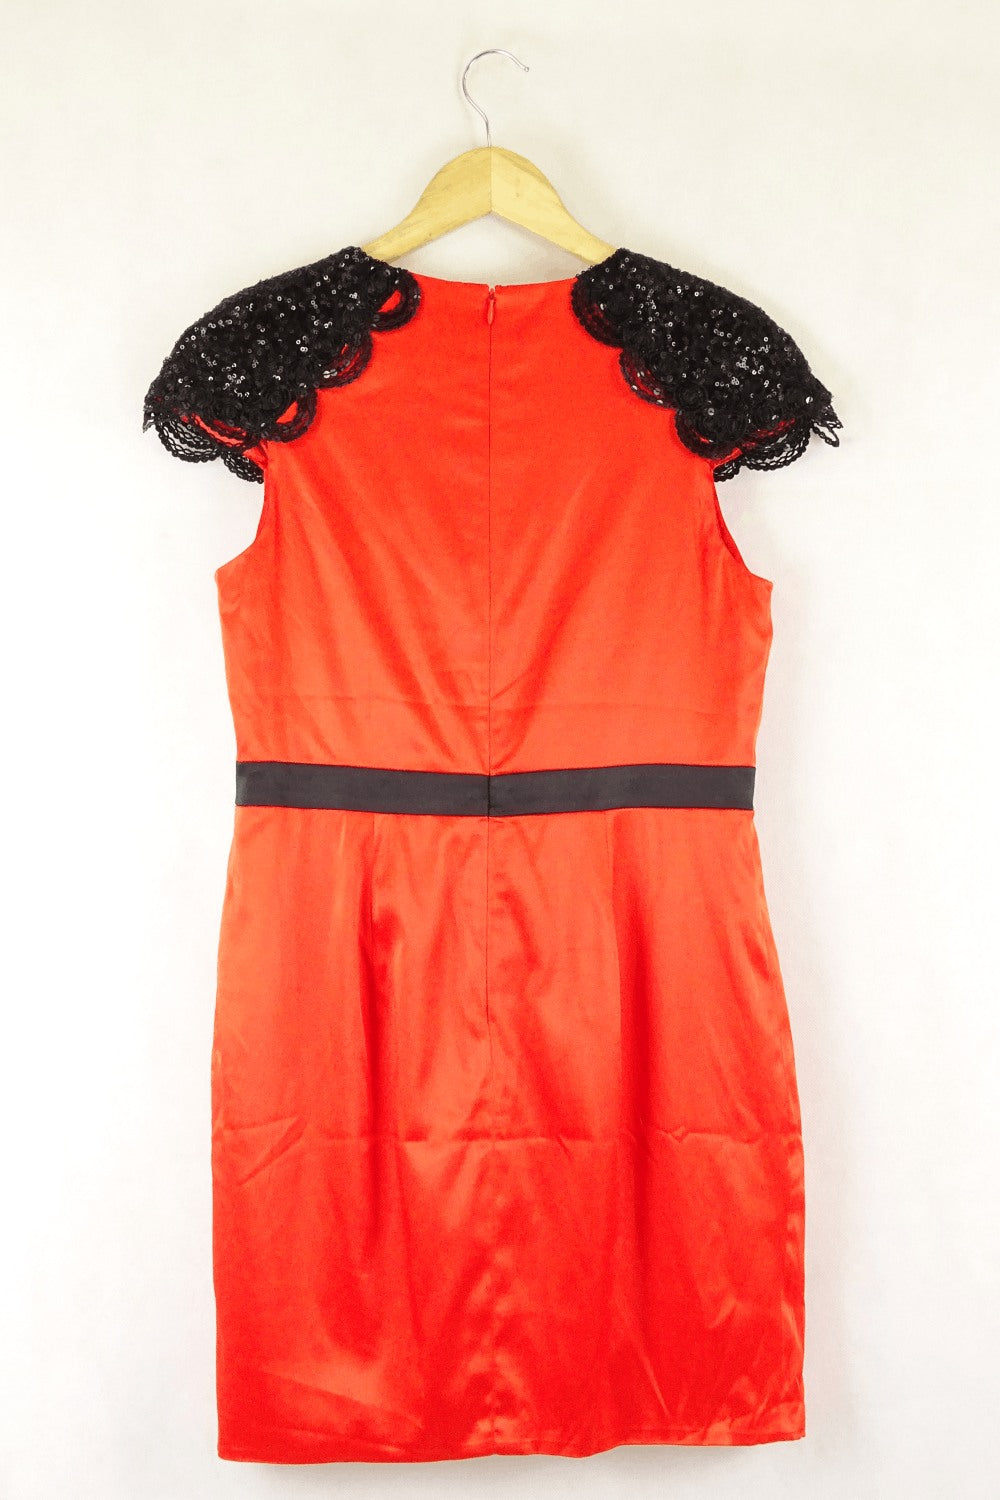 Elle Zeitoune Orange And Lace Dress 14